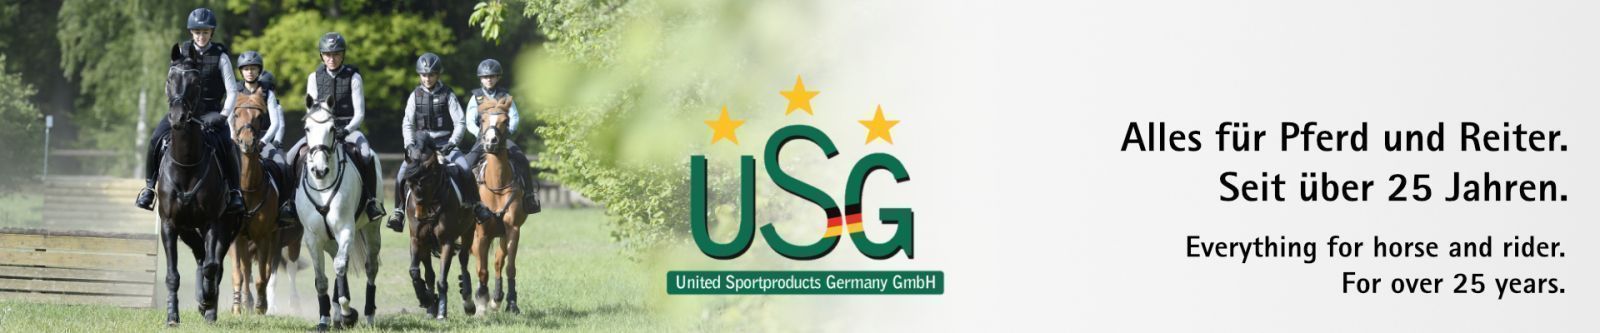  USG Retailer  - USG - United Sportproducts Germany GmbH